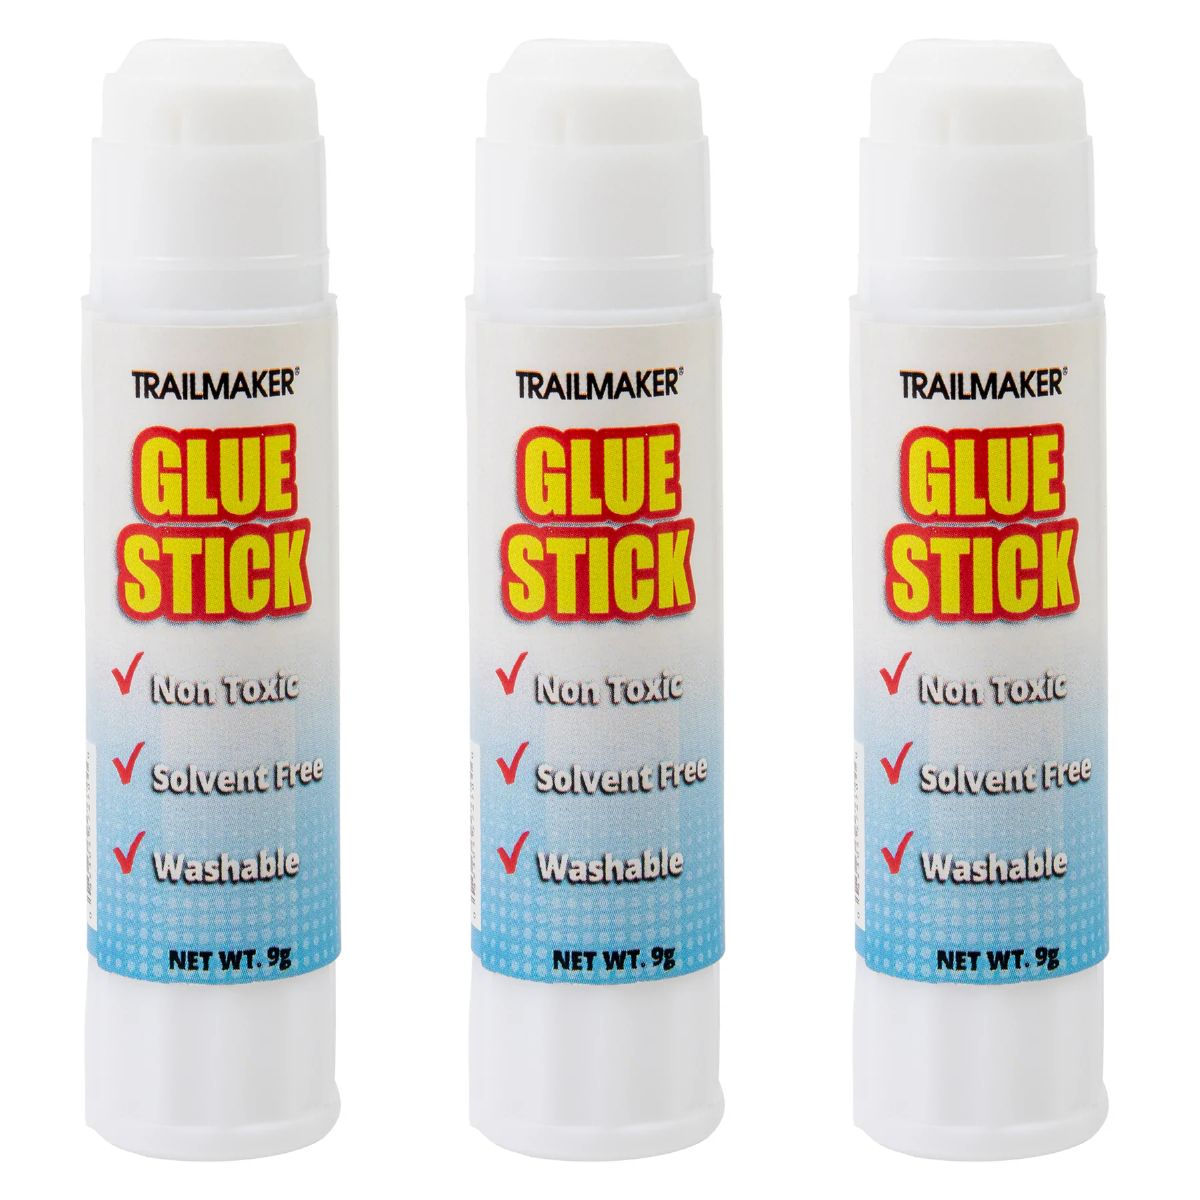 100 Packs of Glue Stick - 3 Pack